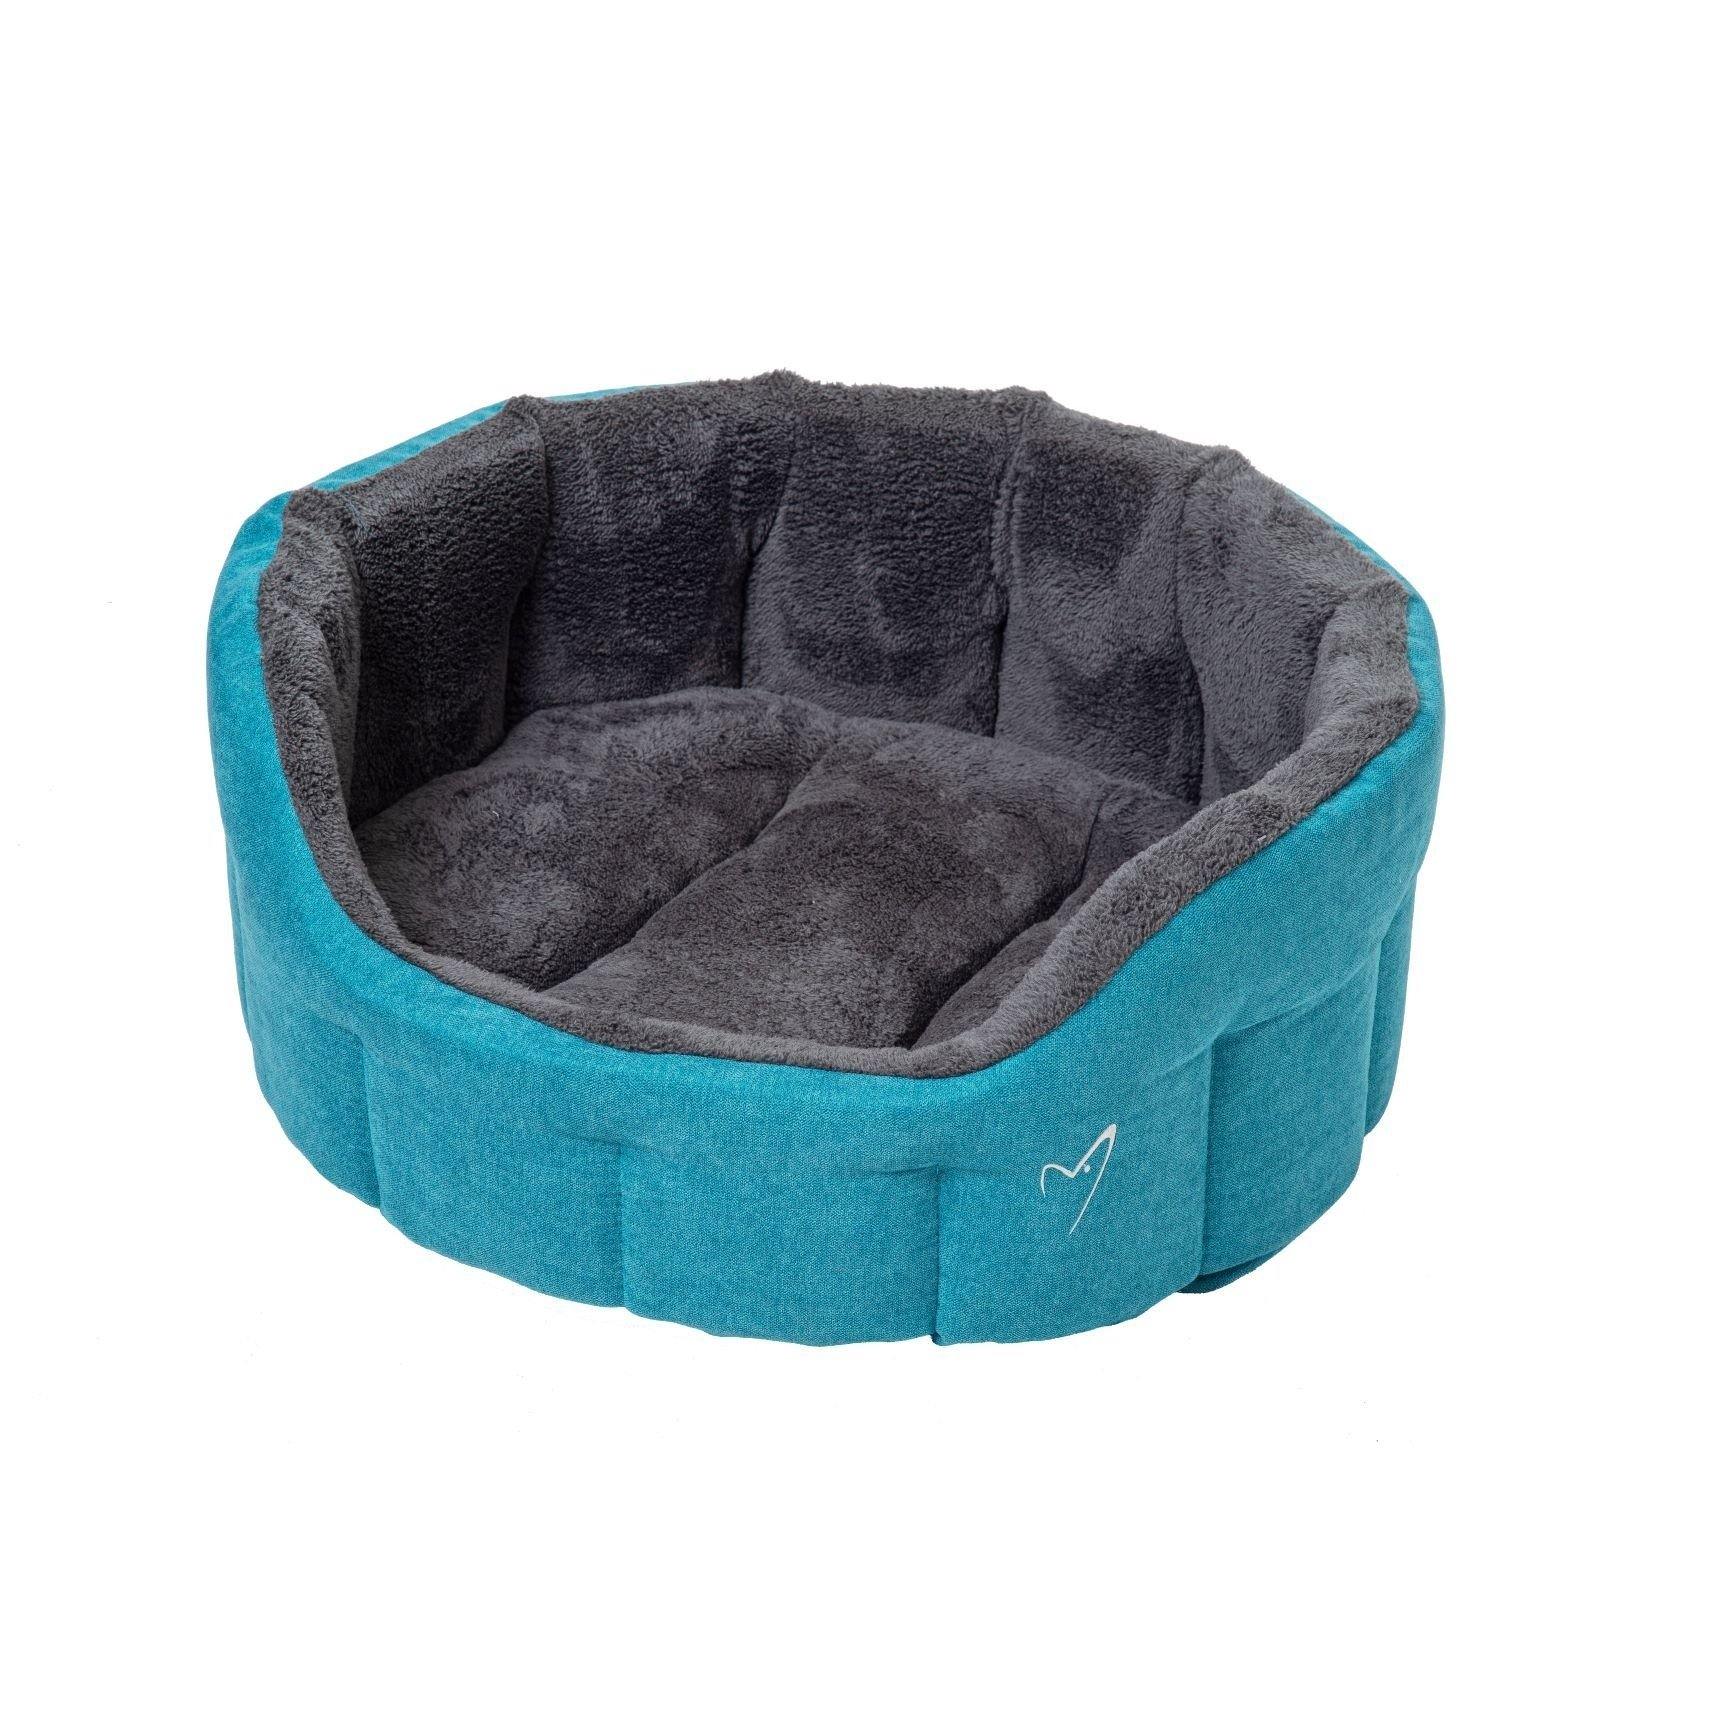 Gor Pets "Camden" Deluxe Dog Bed - Dog Bed Outlet